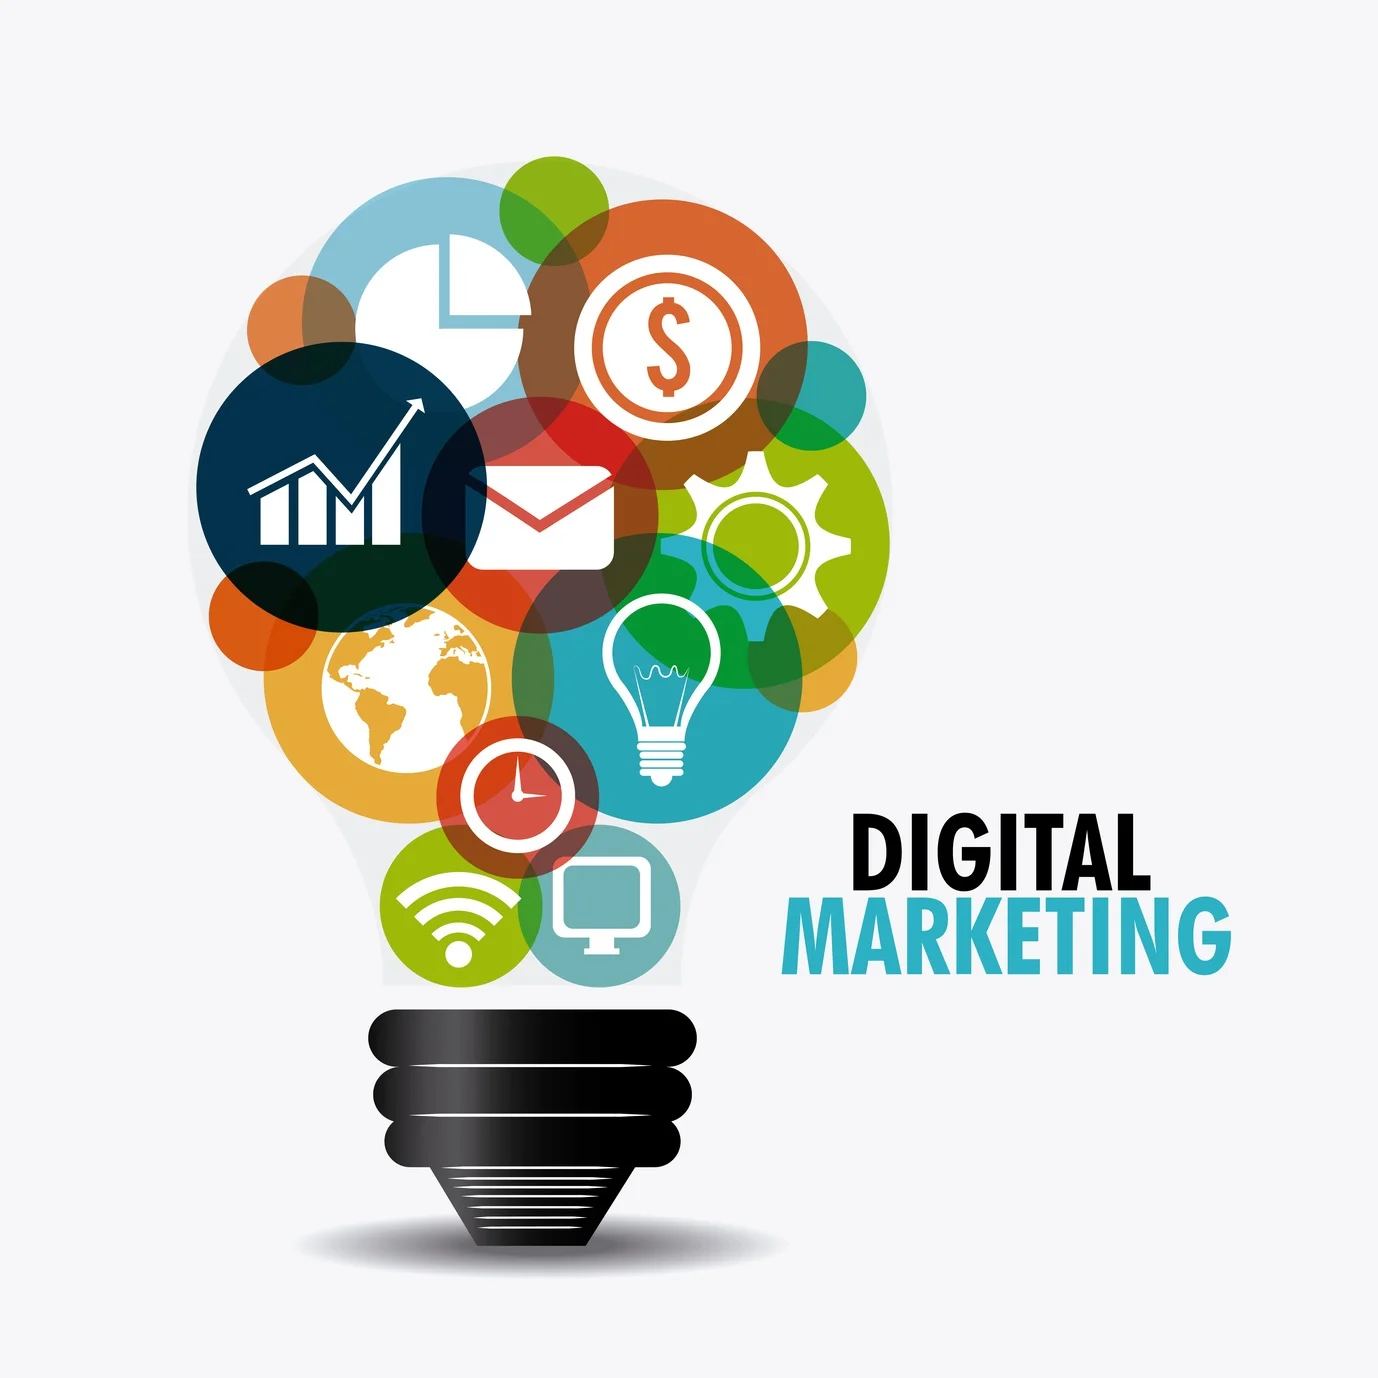 digital marketing services in ghaziabad, digital marketing services, digital marketing, digital marketing in ghaziabad, marketing services in ghaziabad, marketing services, digital, marketing, services, ghaziabad, digital marketing service